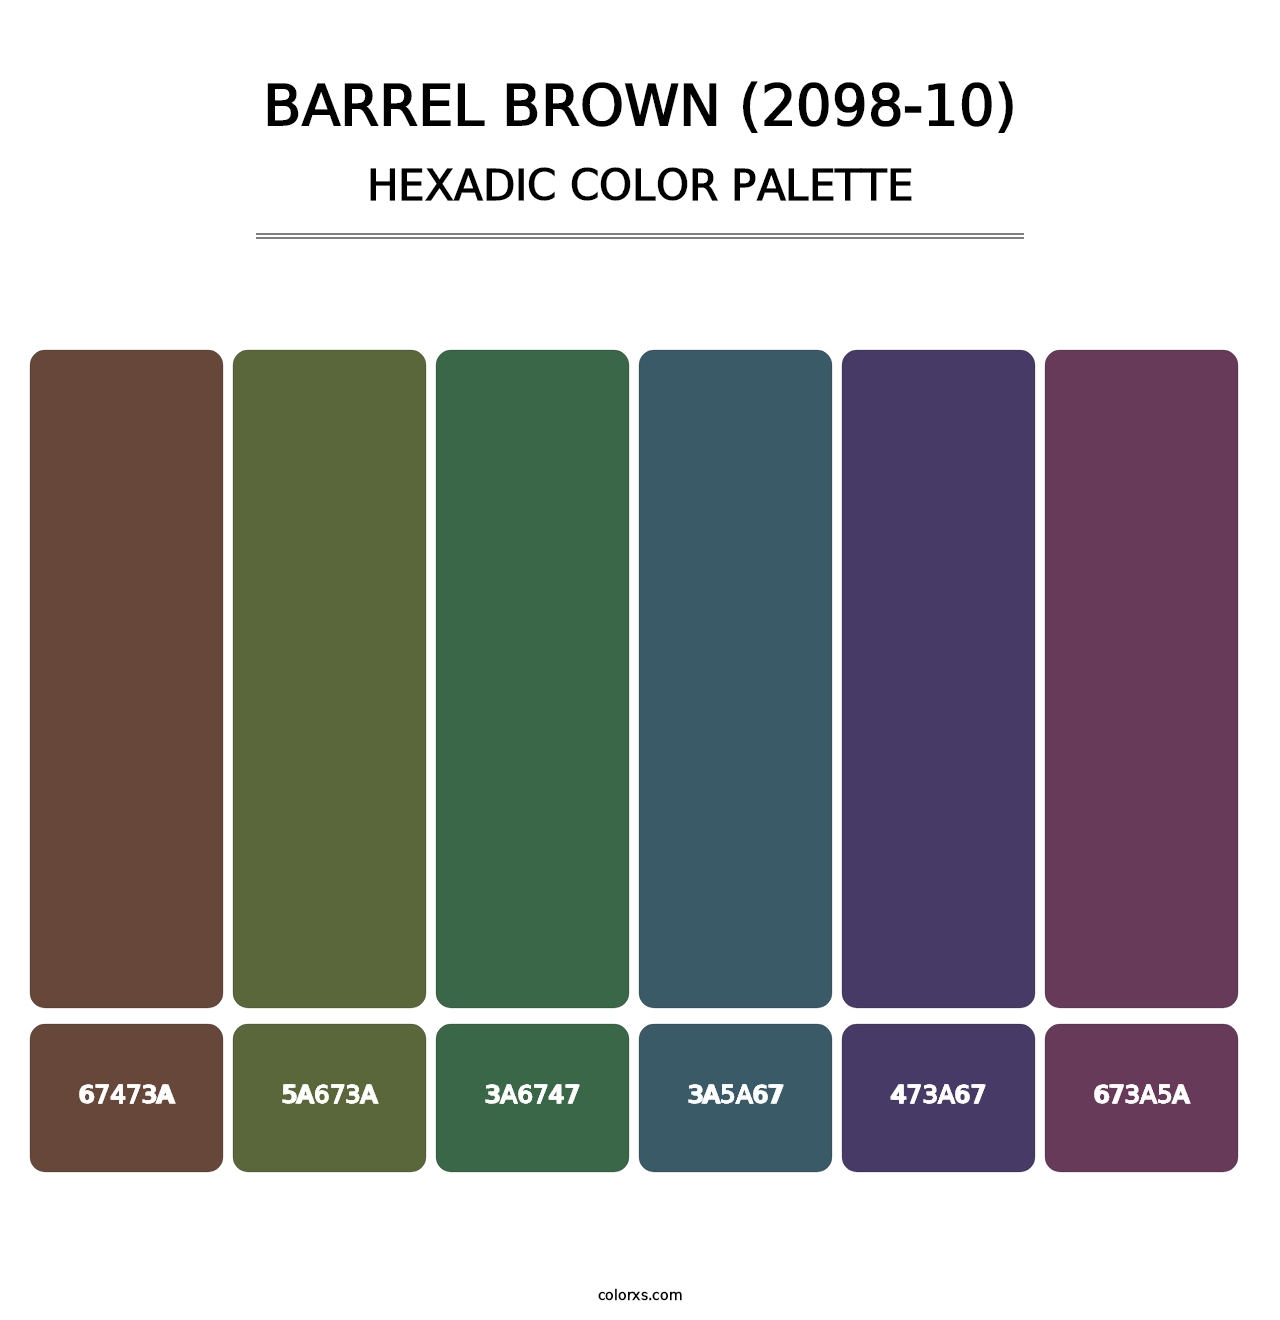 Barrel Brown (2098-10) - Hexadic Color Palette